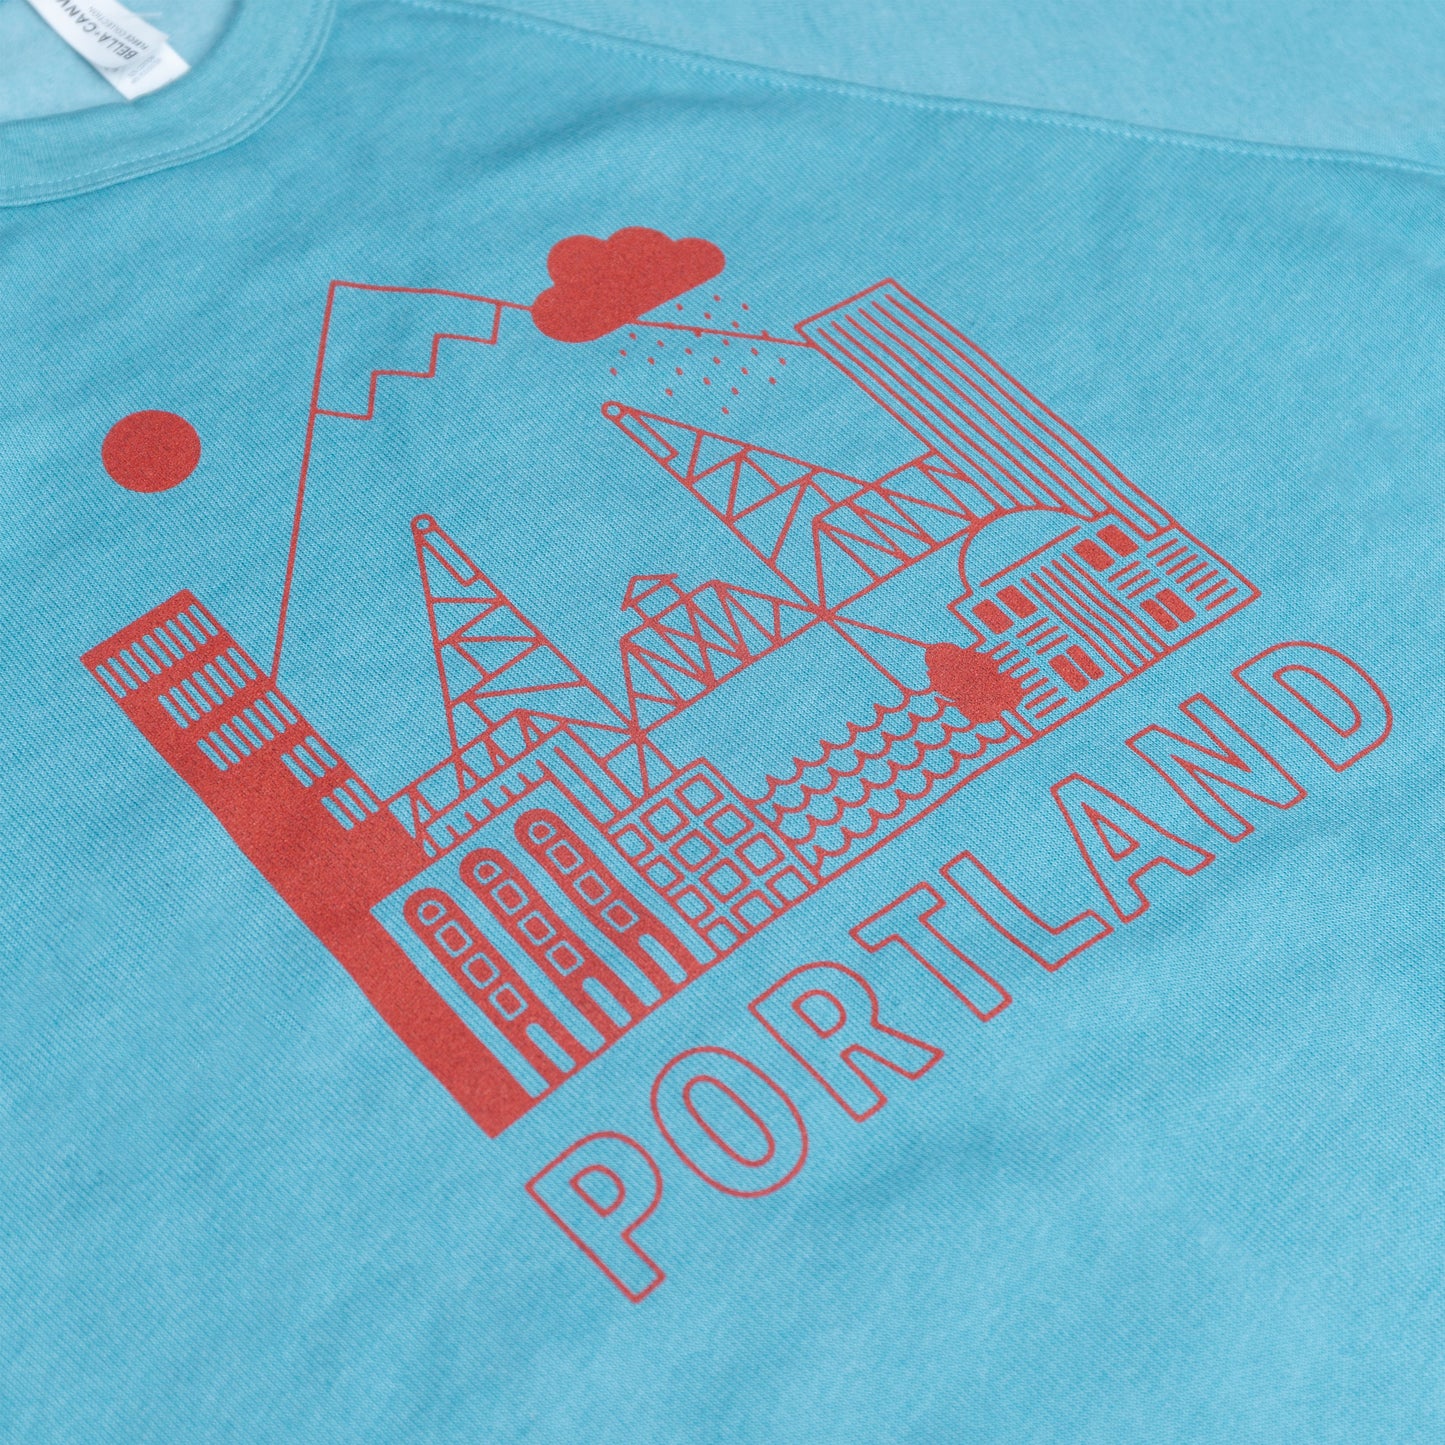 Portland Skyline Crew Sweatshirt (Heather Blue)